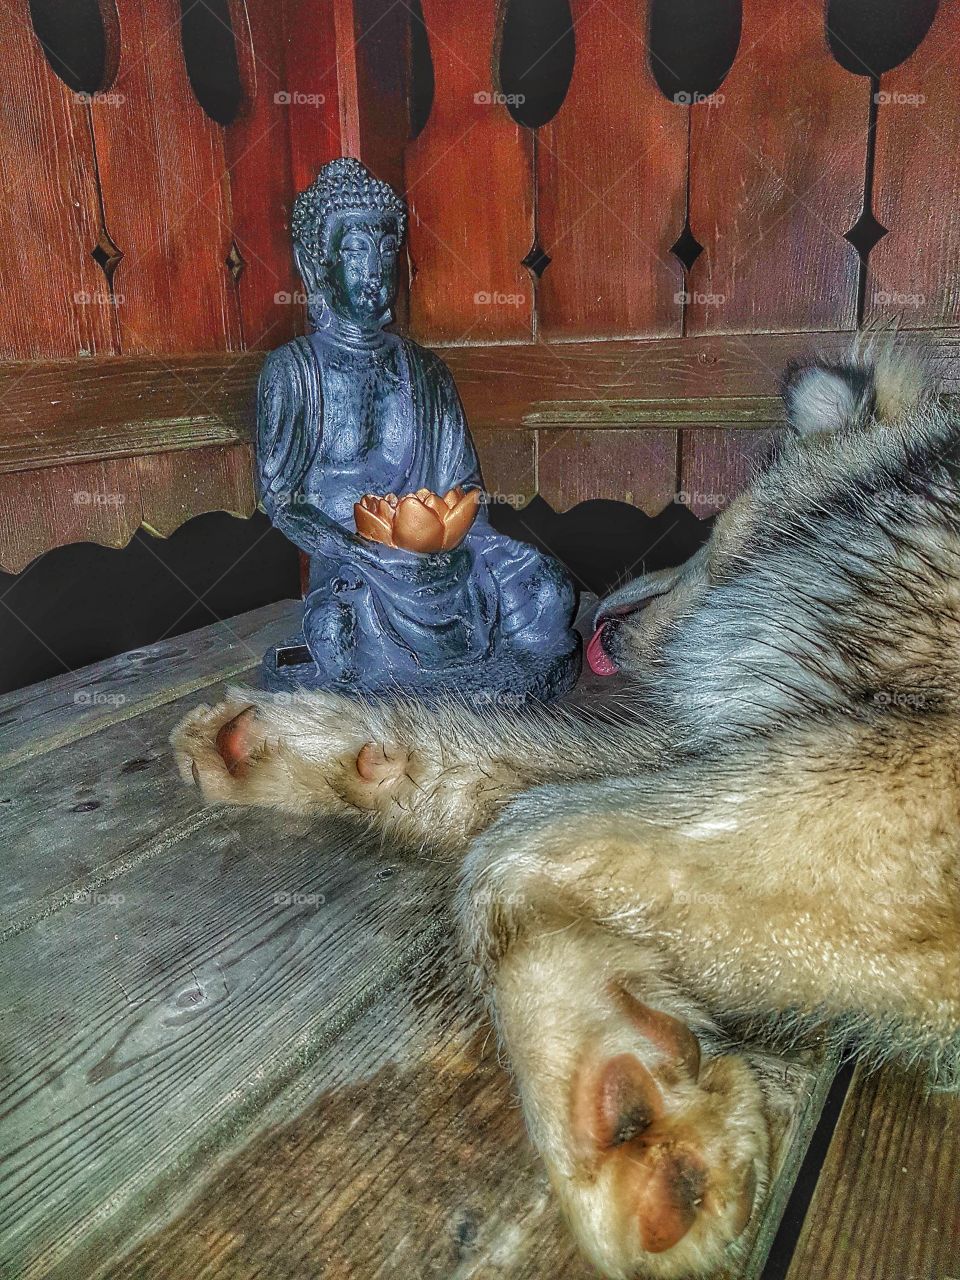 Sleeping with Buddha